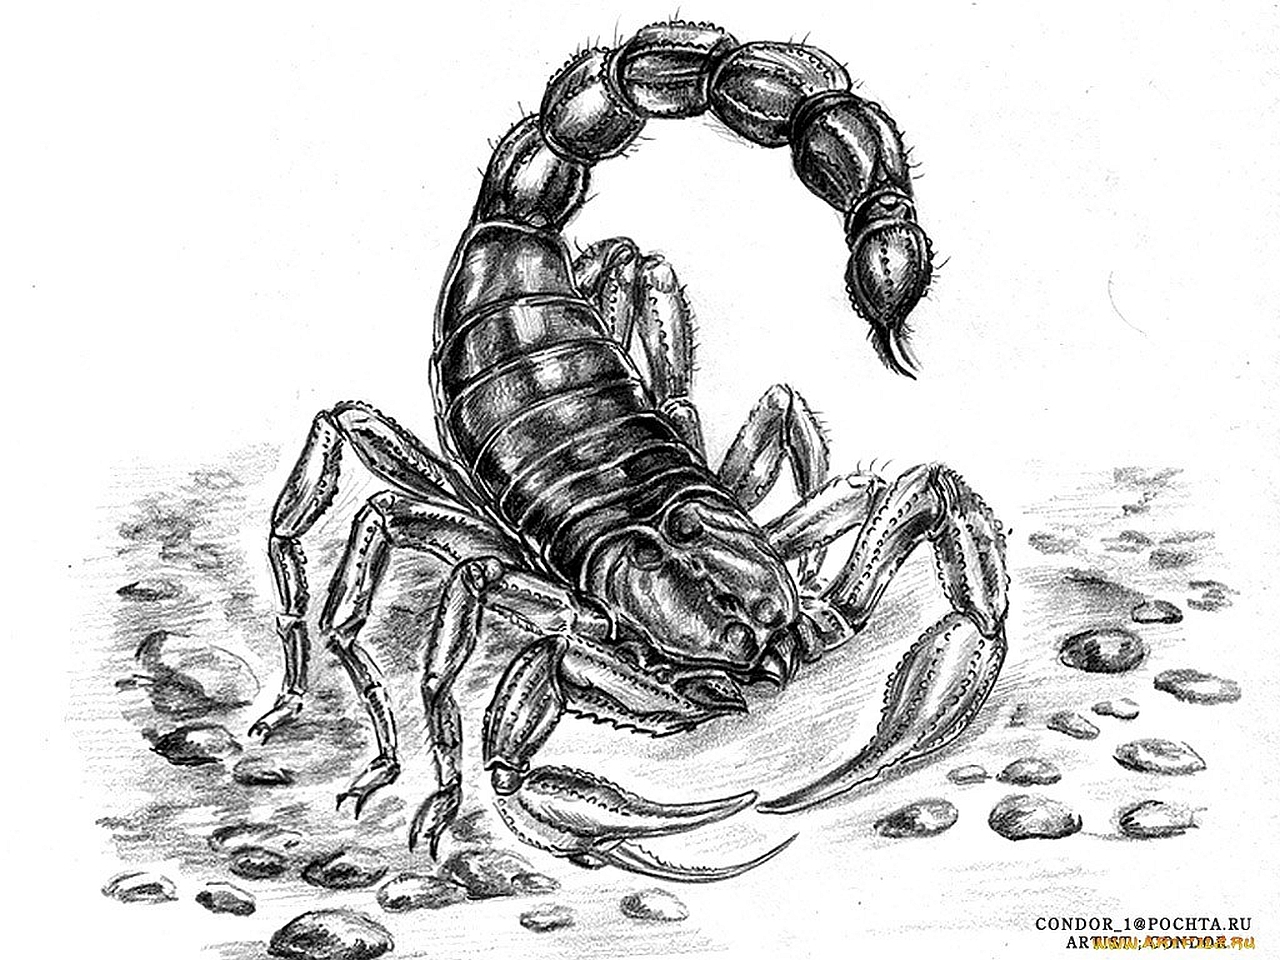 scorpion, animal